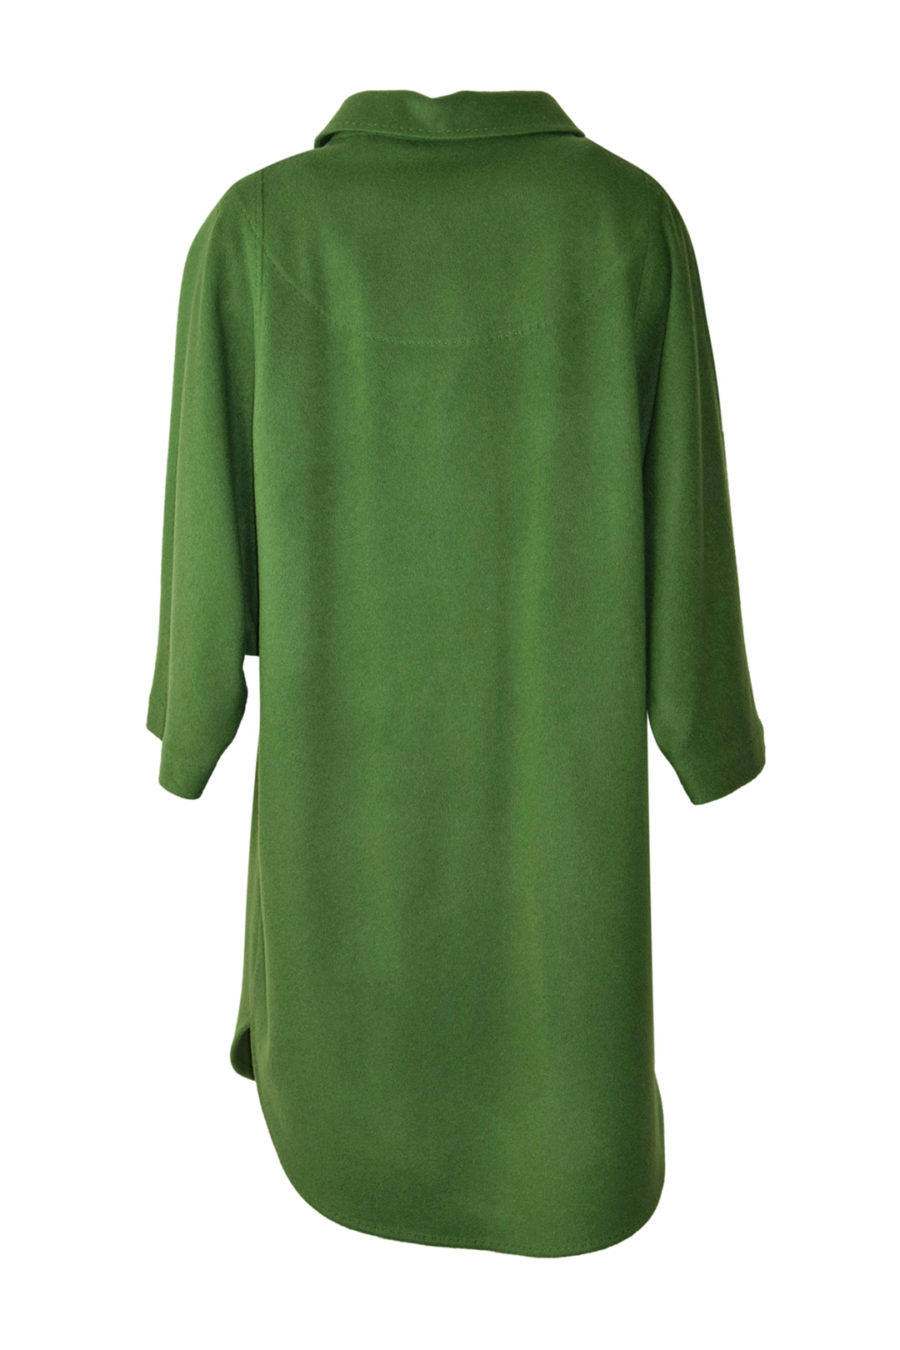 Mantel in T-Cut-Style mit vergoldeten Drehverschlüssen, 100% Kaschmir